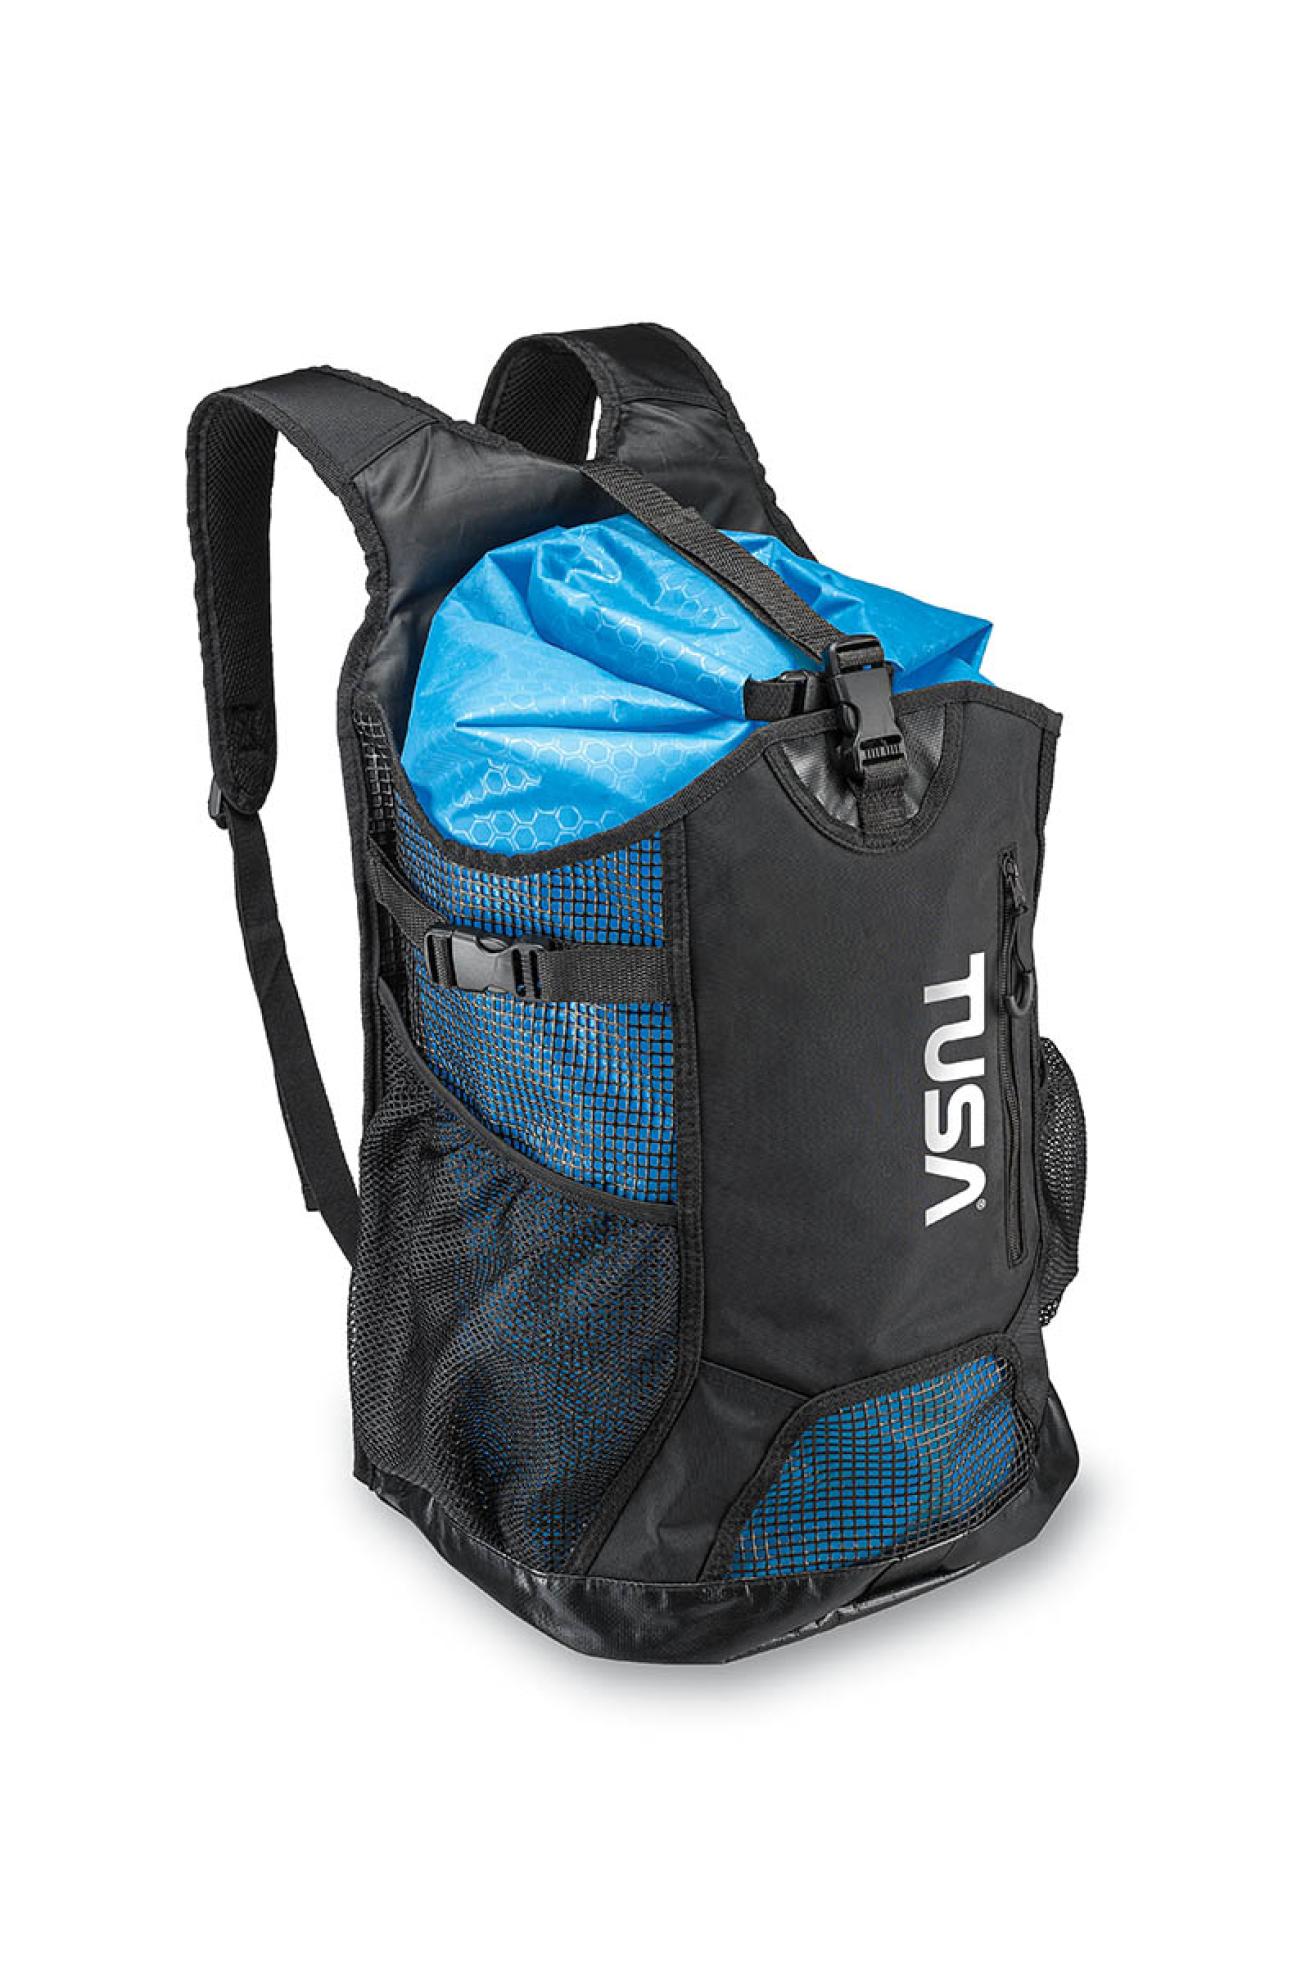 Tusa Mesh Back Pack with Dry Bag